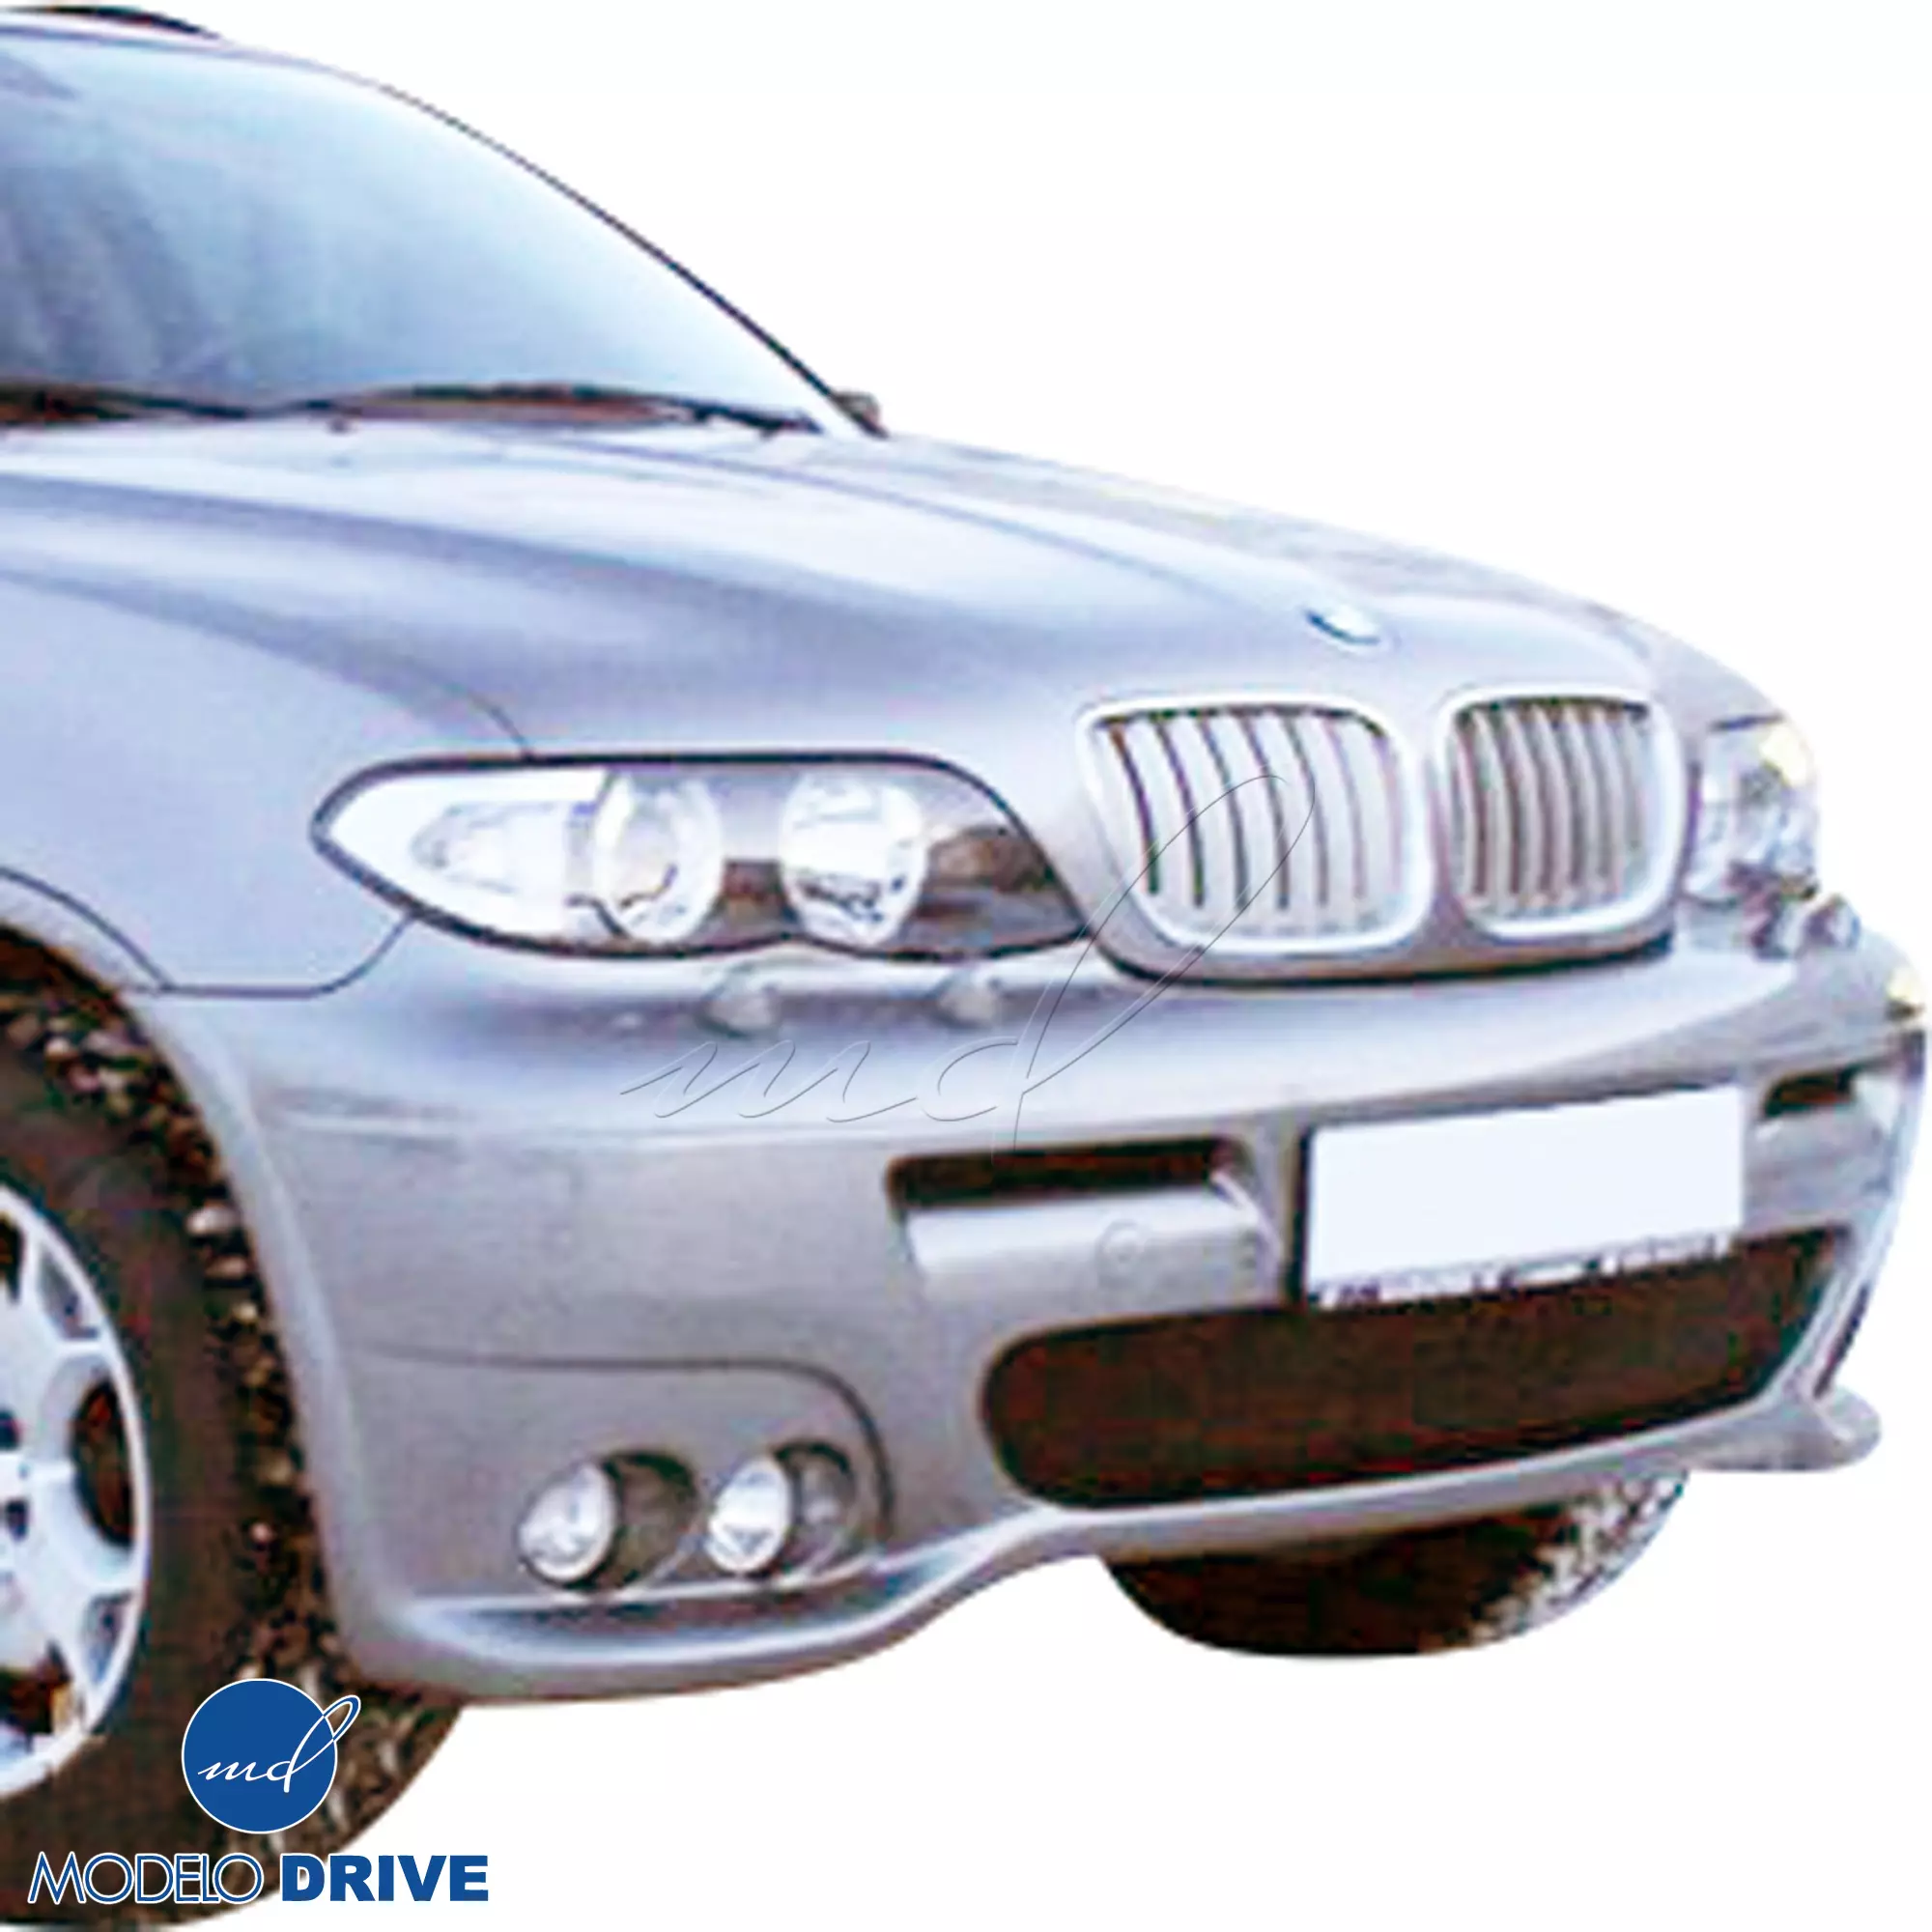 ModeloDrive FRP HAMA Body Kit 3pc > BMW X5 E53 2000-2006 > 5dr - Image 20